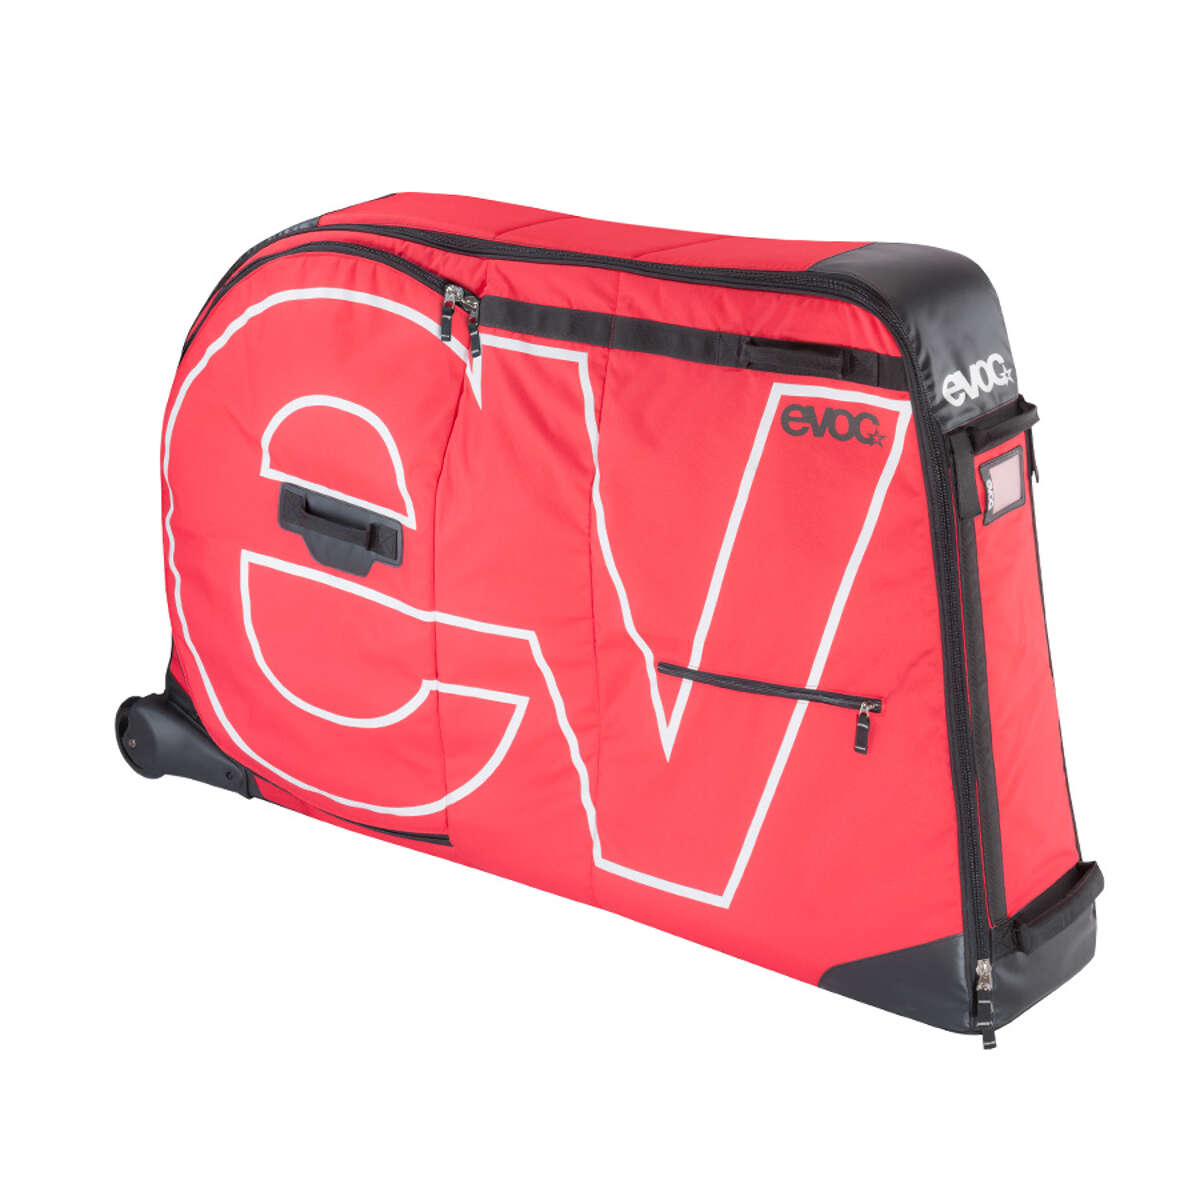 Evoc Bike Travel Bag  Red, 280 Liter